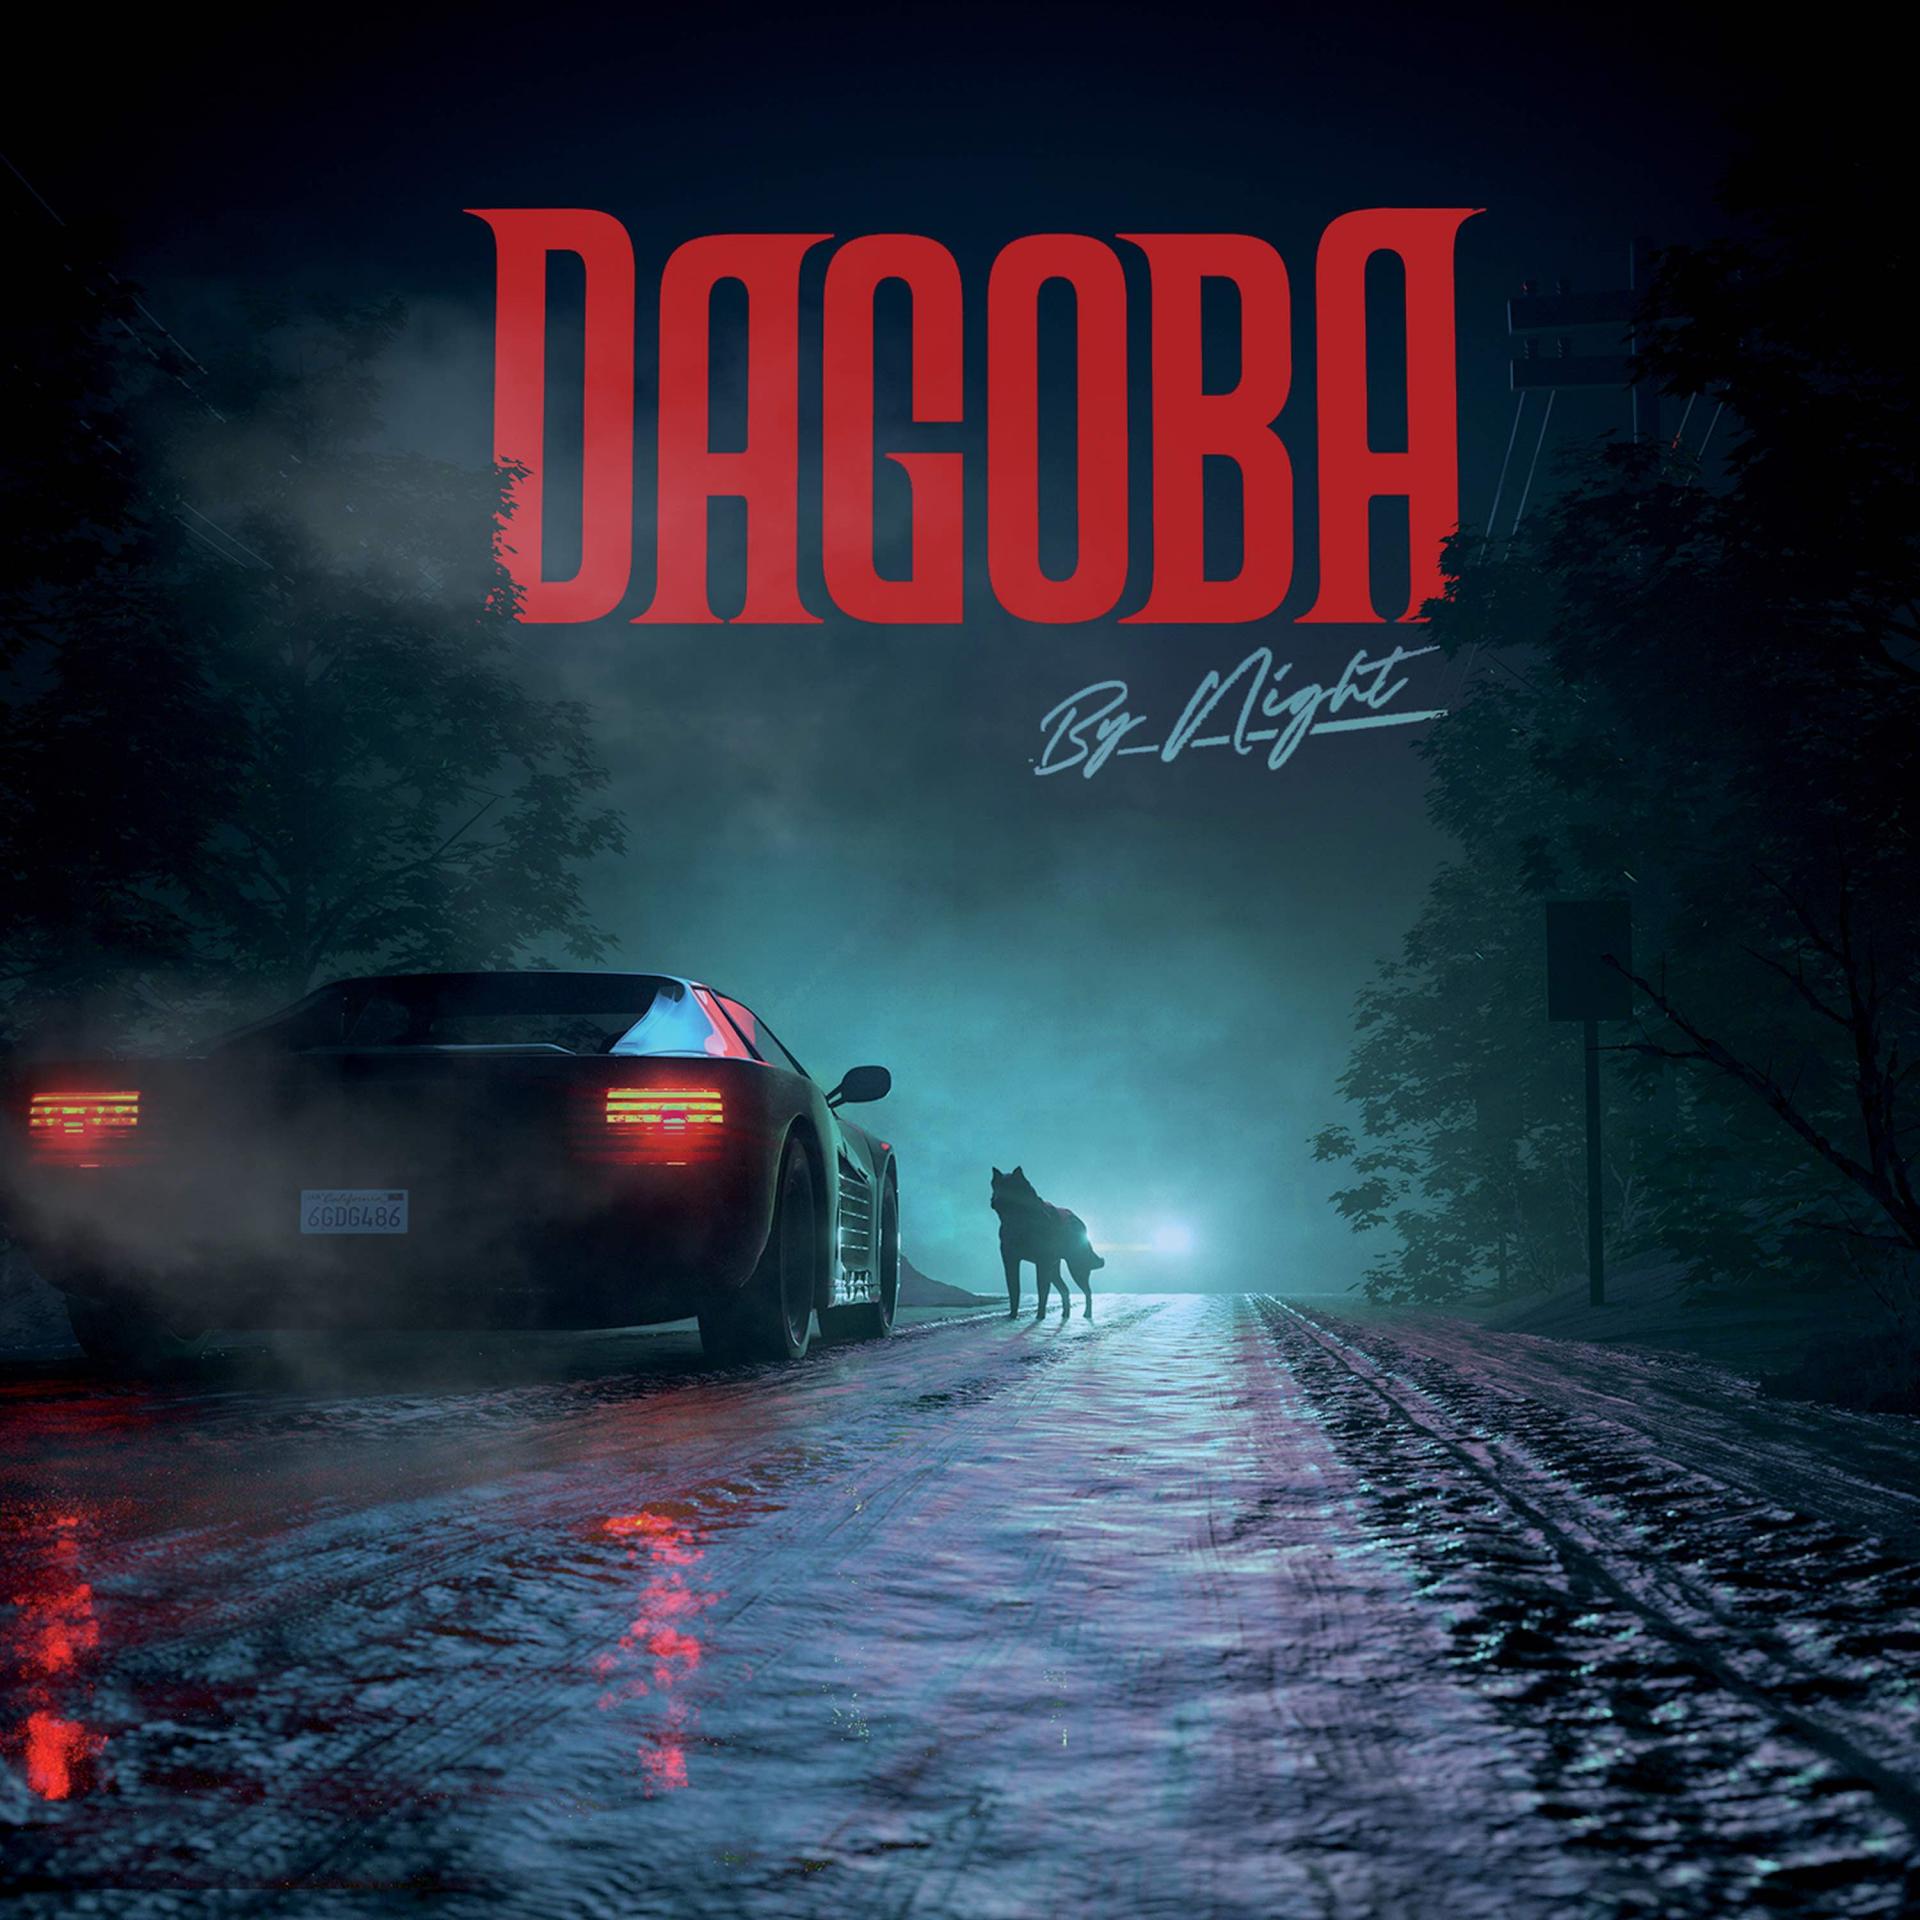 Dagoba by night